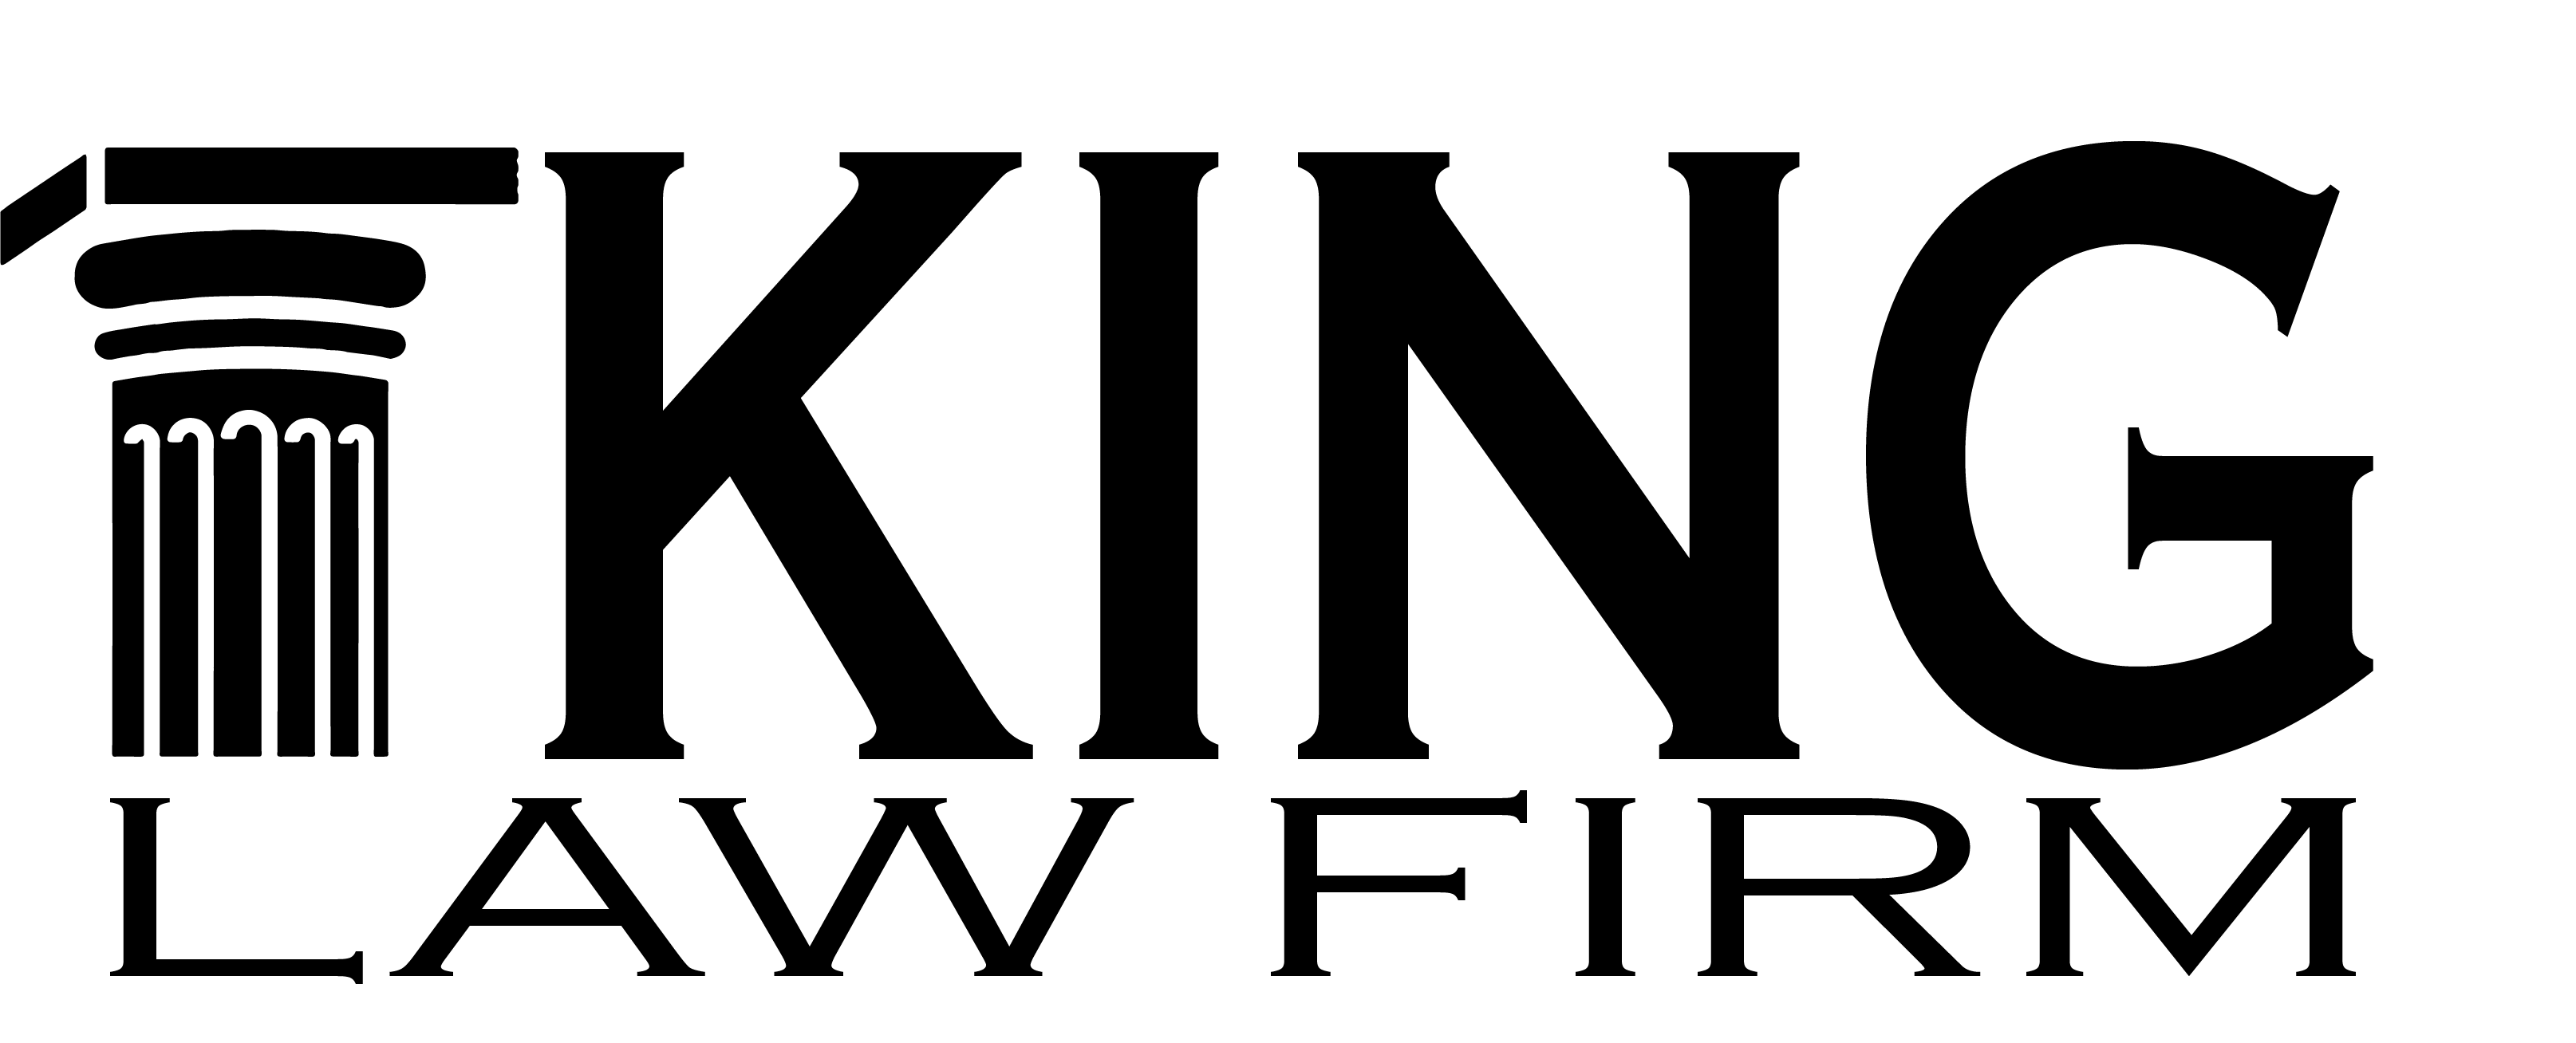 sample-logo